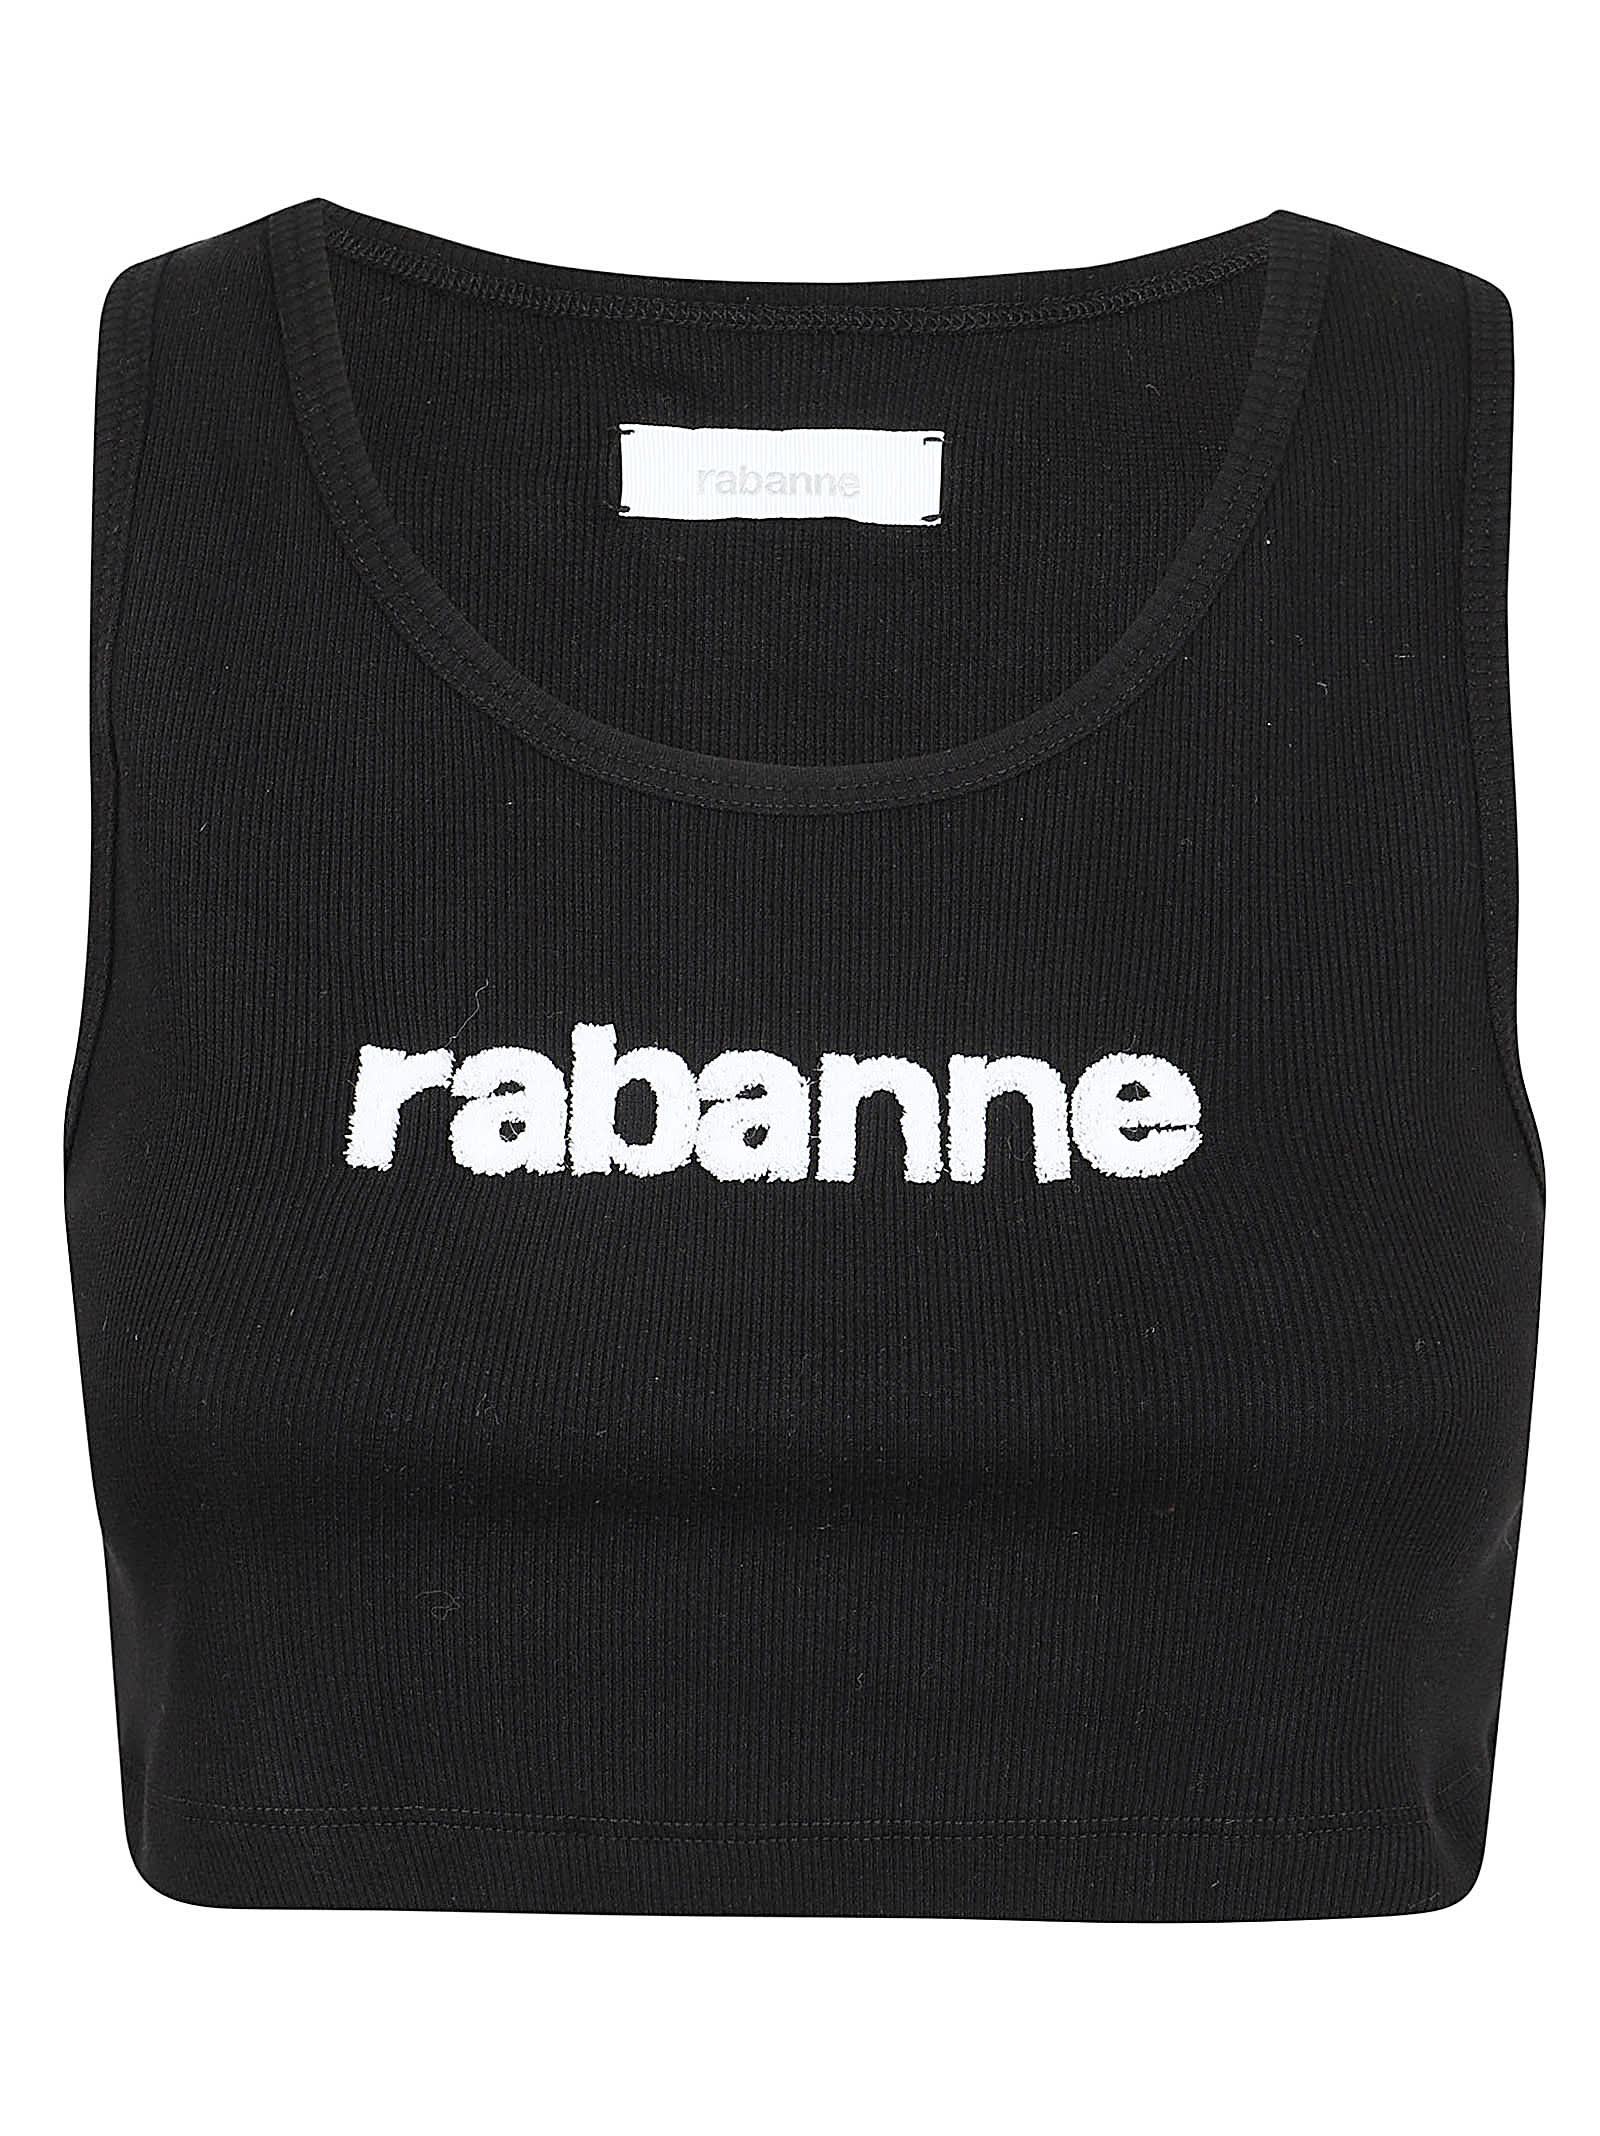 Paco Rabanne Tee Shirt